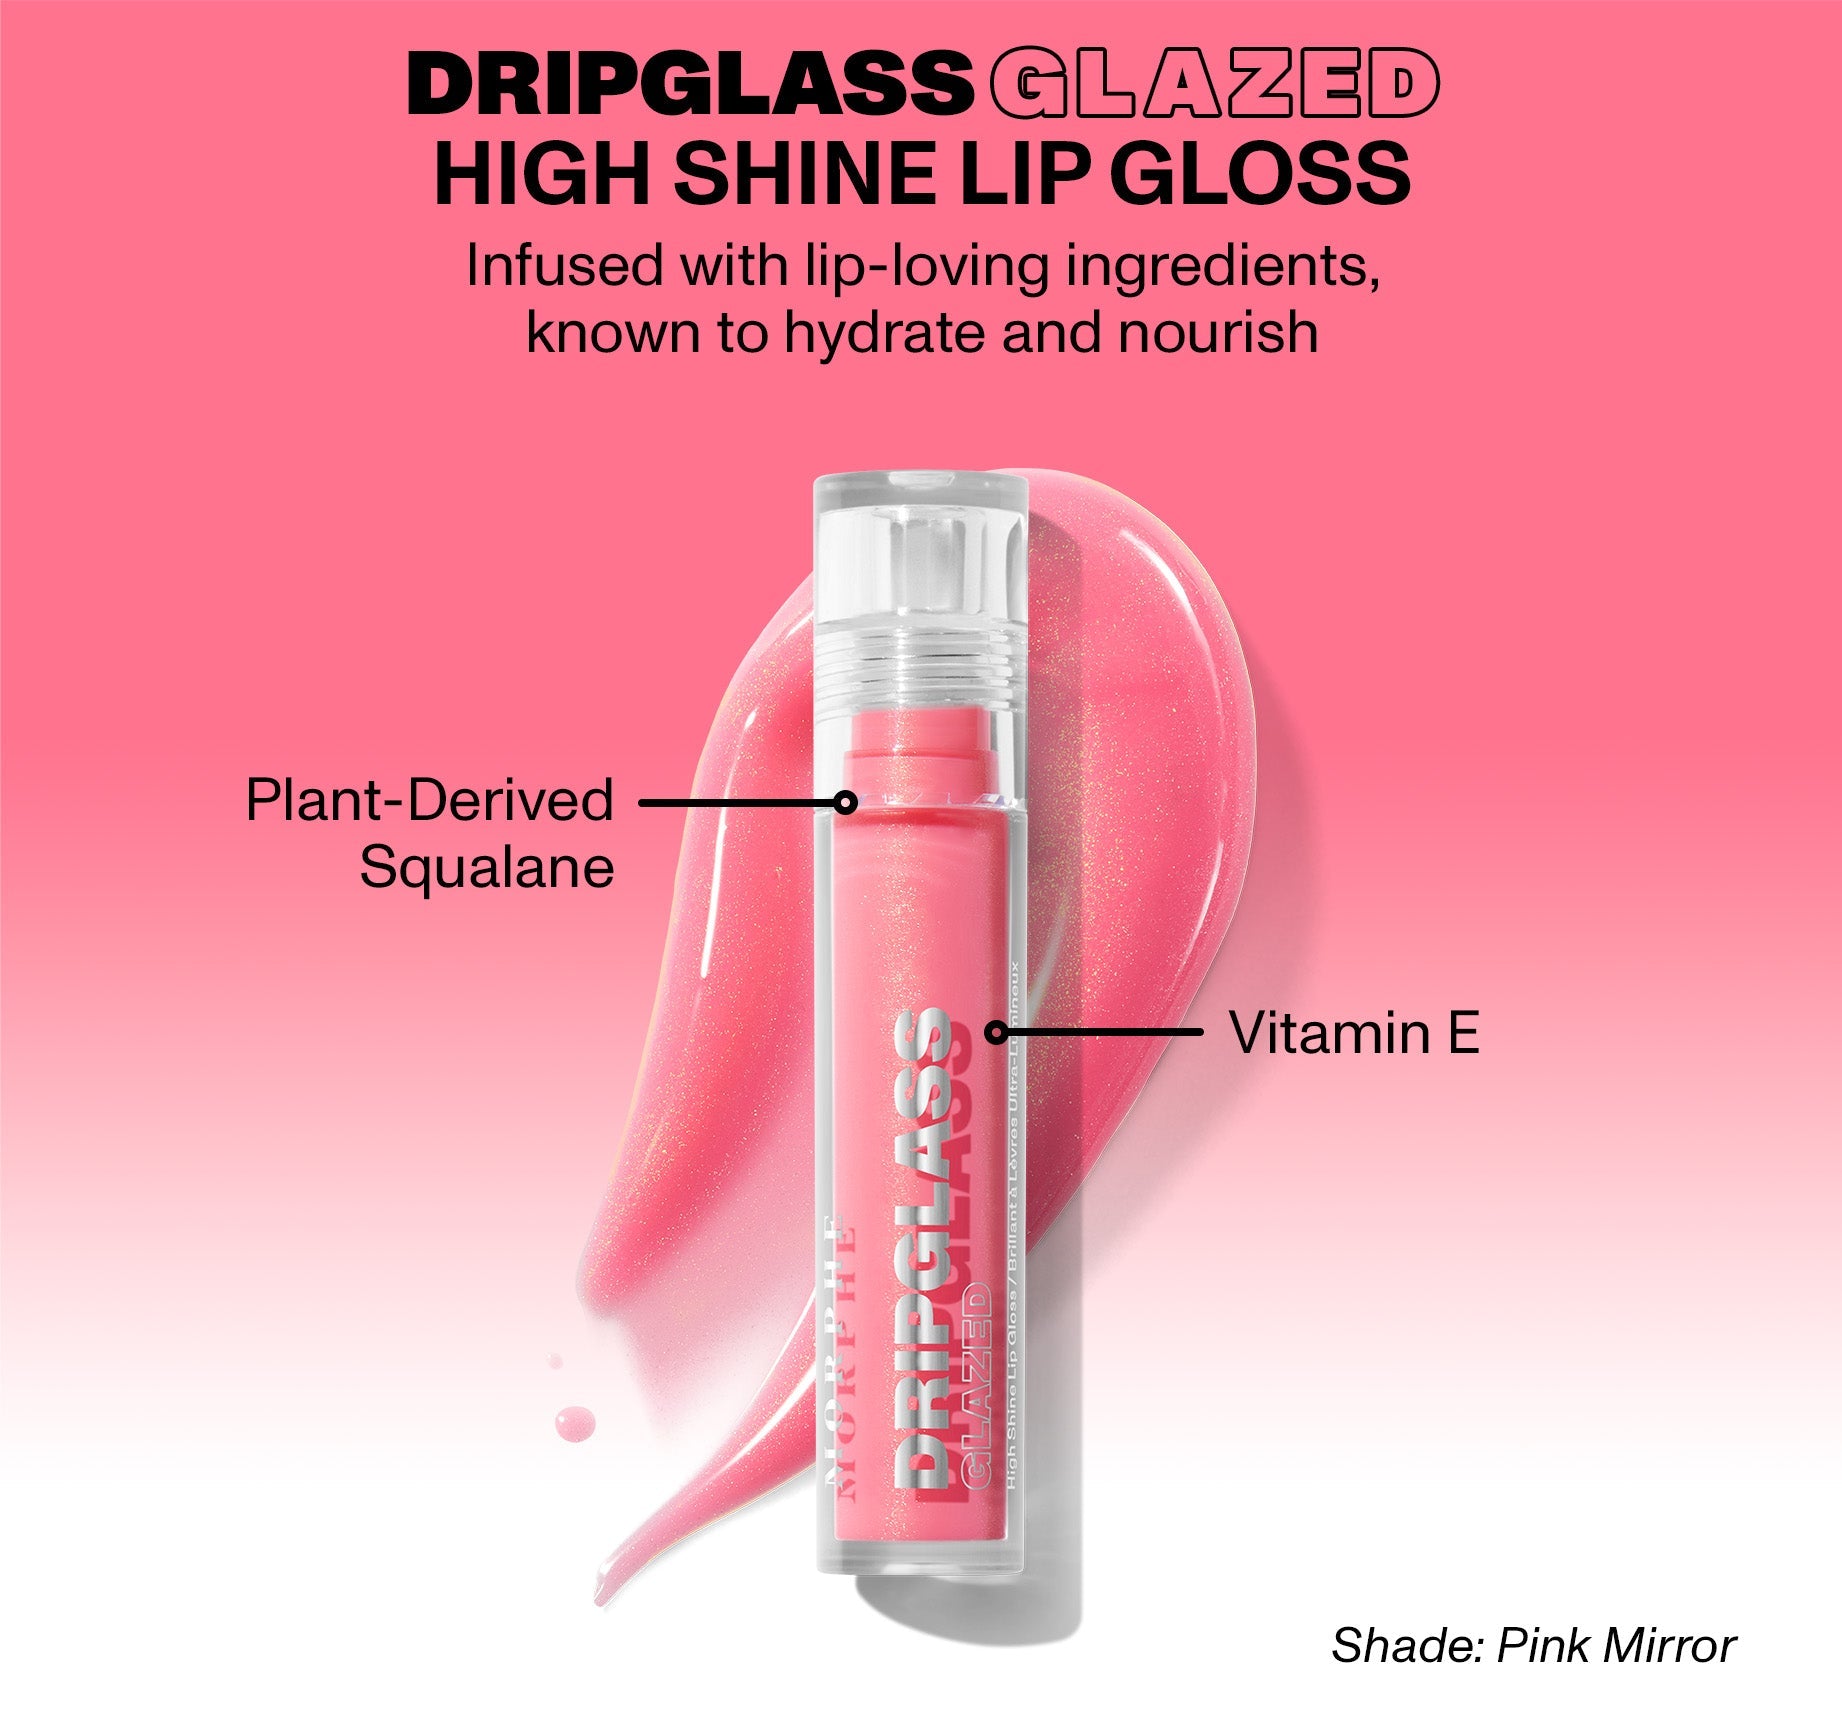 Dripglass Glazed High Shine Lip Gloss - Nude Gleam - Image 9